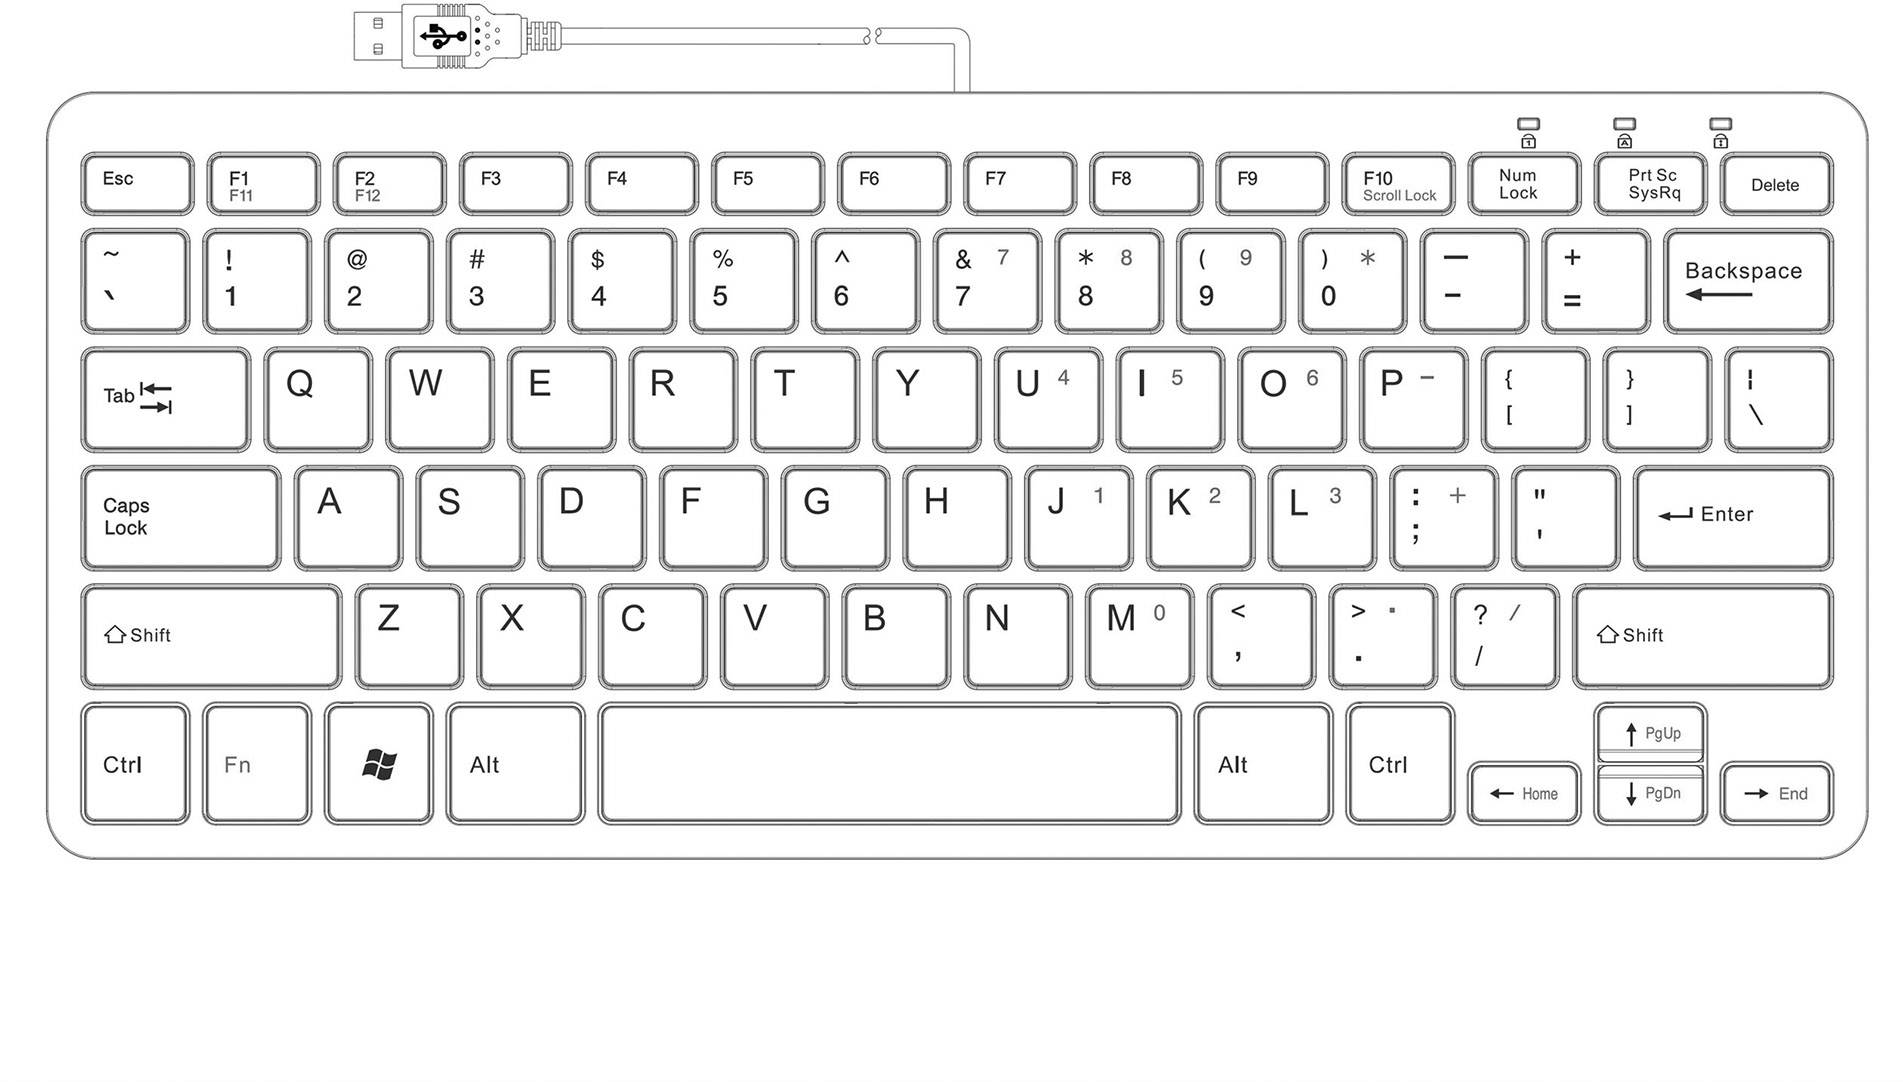 R-GO Tools Compact USB Keyboard English, QWERTY Black Ergonomic